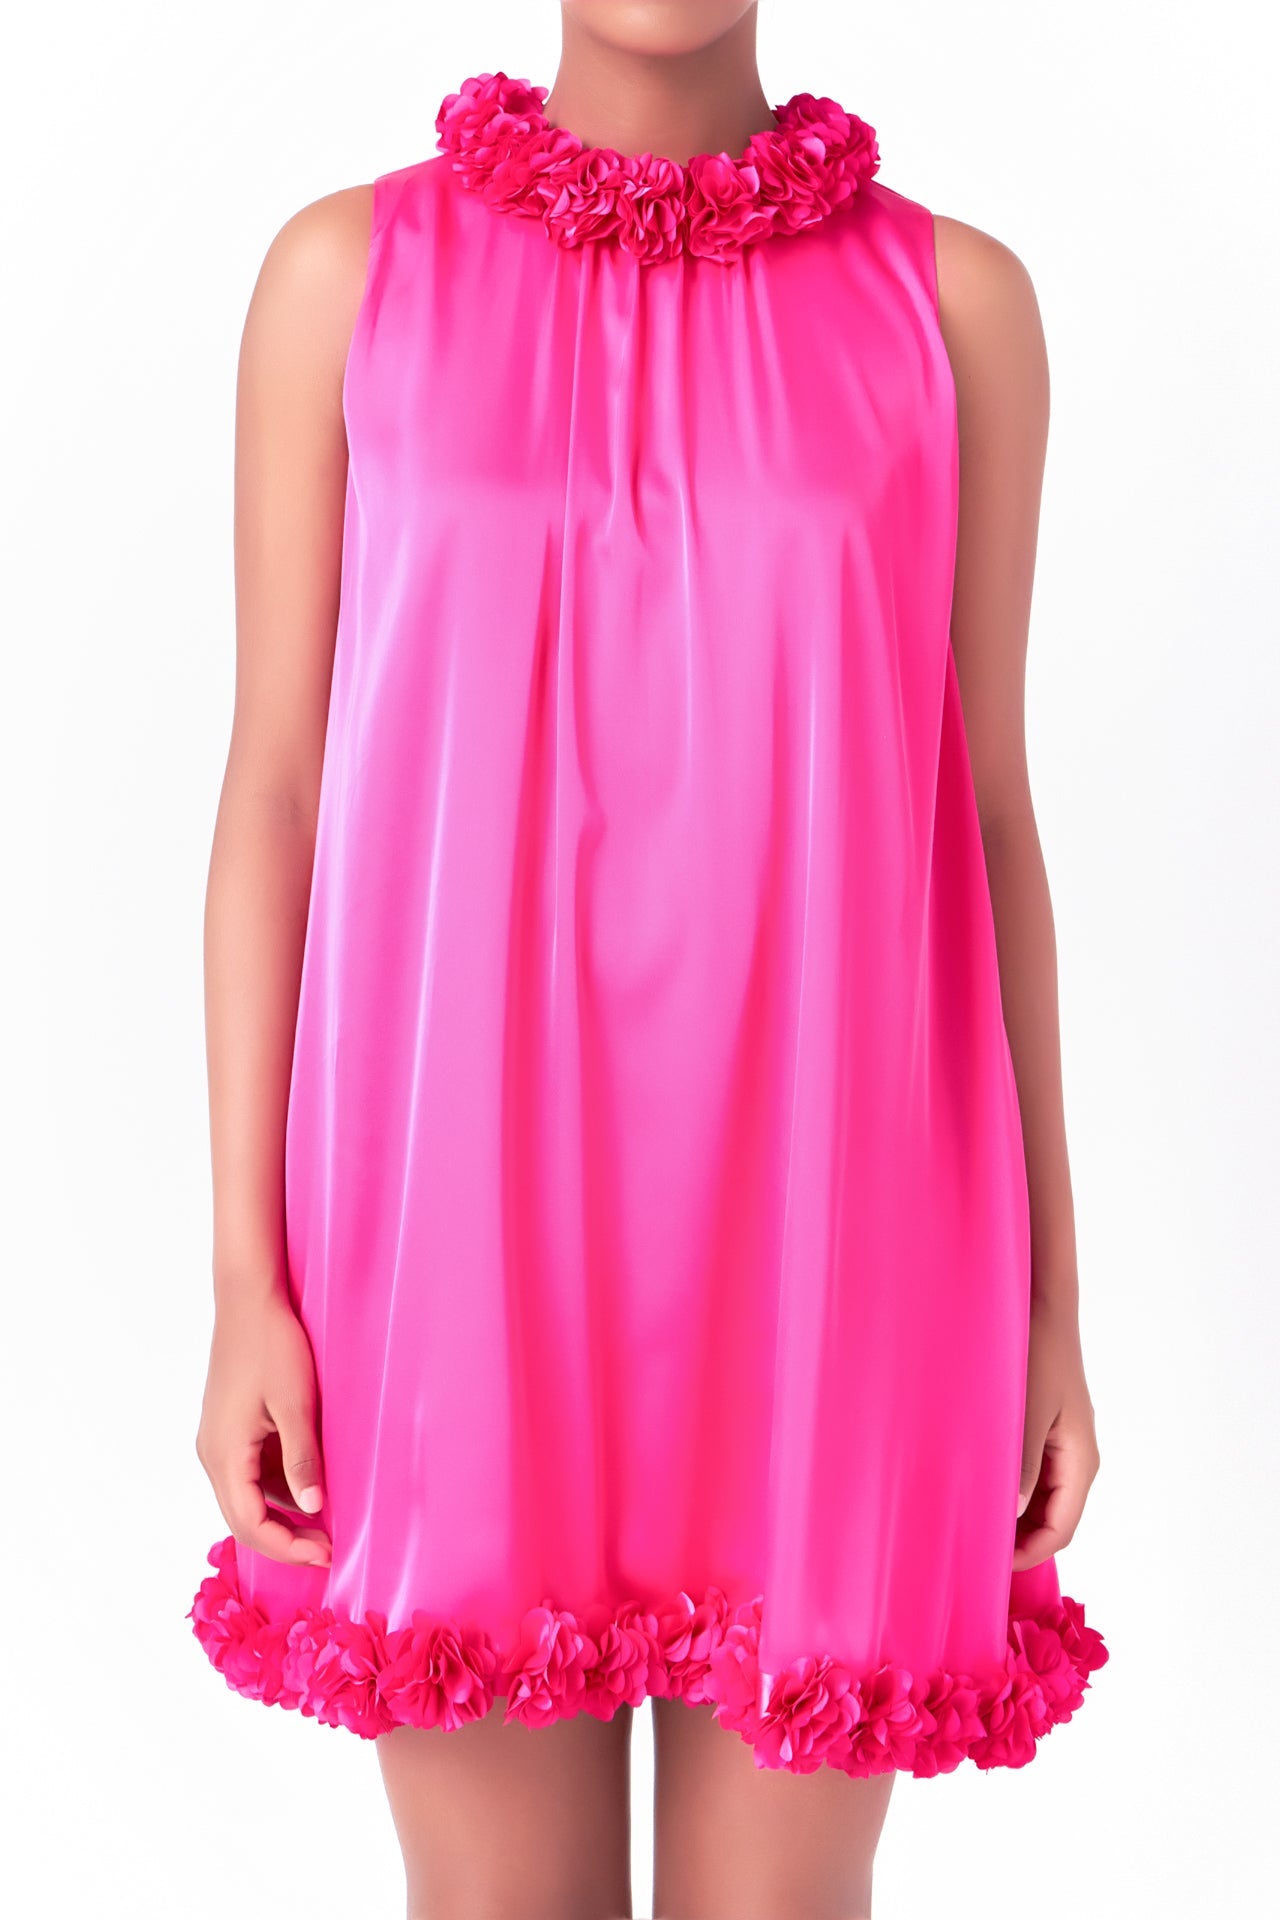 ENDLESS ROSE - Rosette Mini Dress - DRESSES available at Objectrare